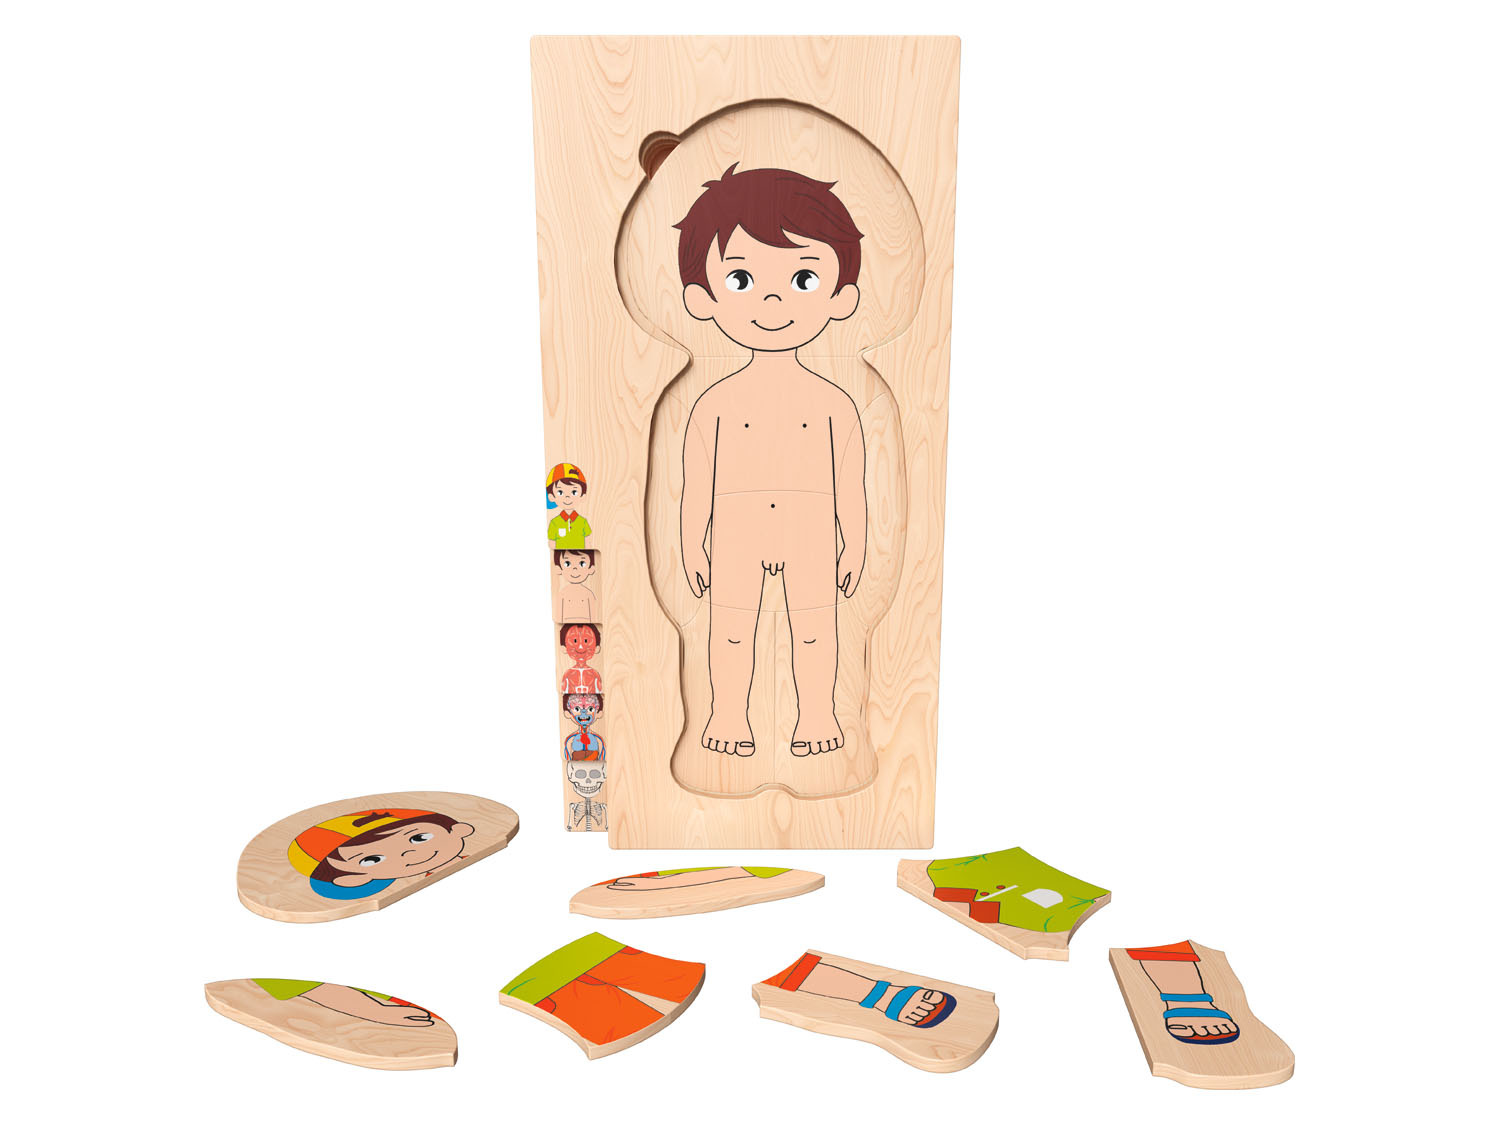 Recensent aflevering kan zijn Playtive Puzzle edukacyjne z naturalnego drewna